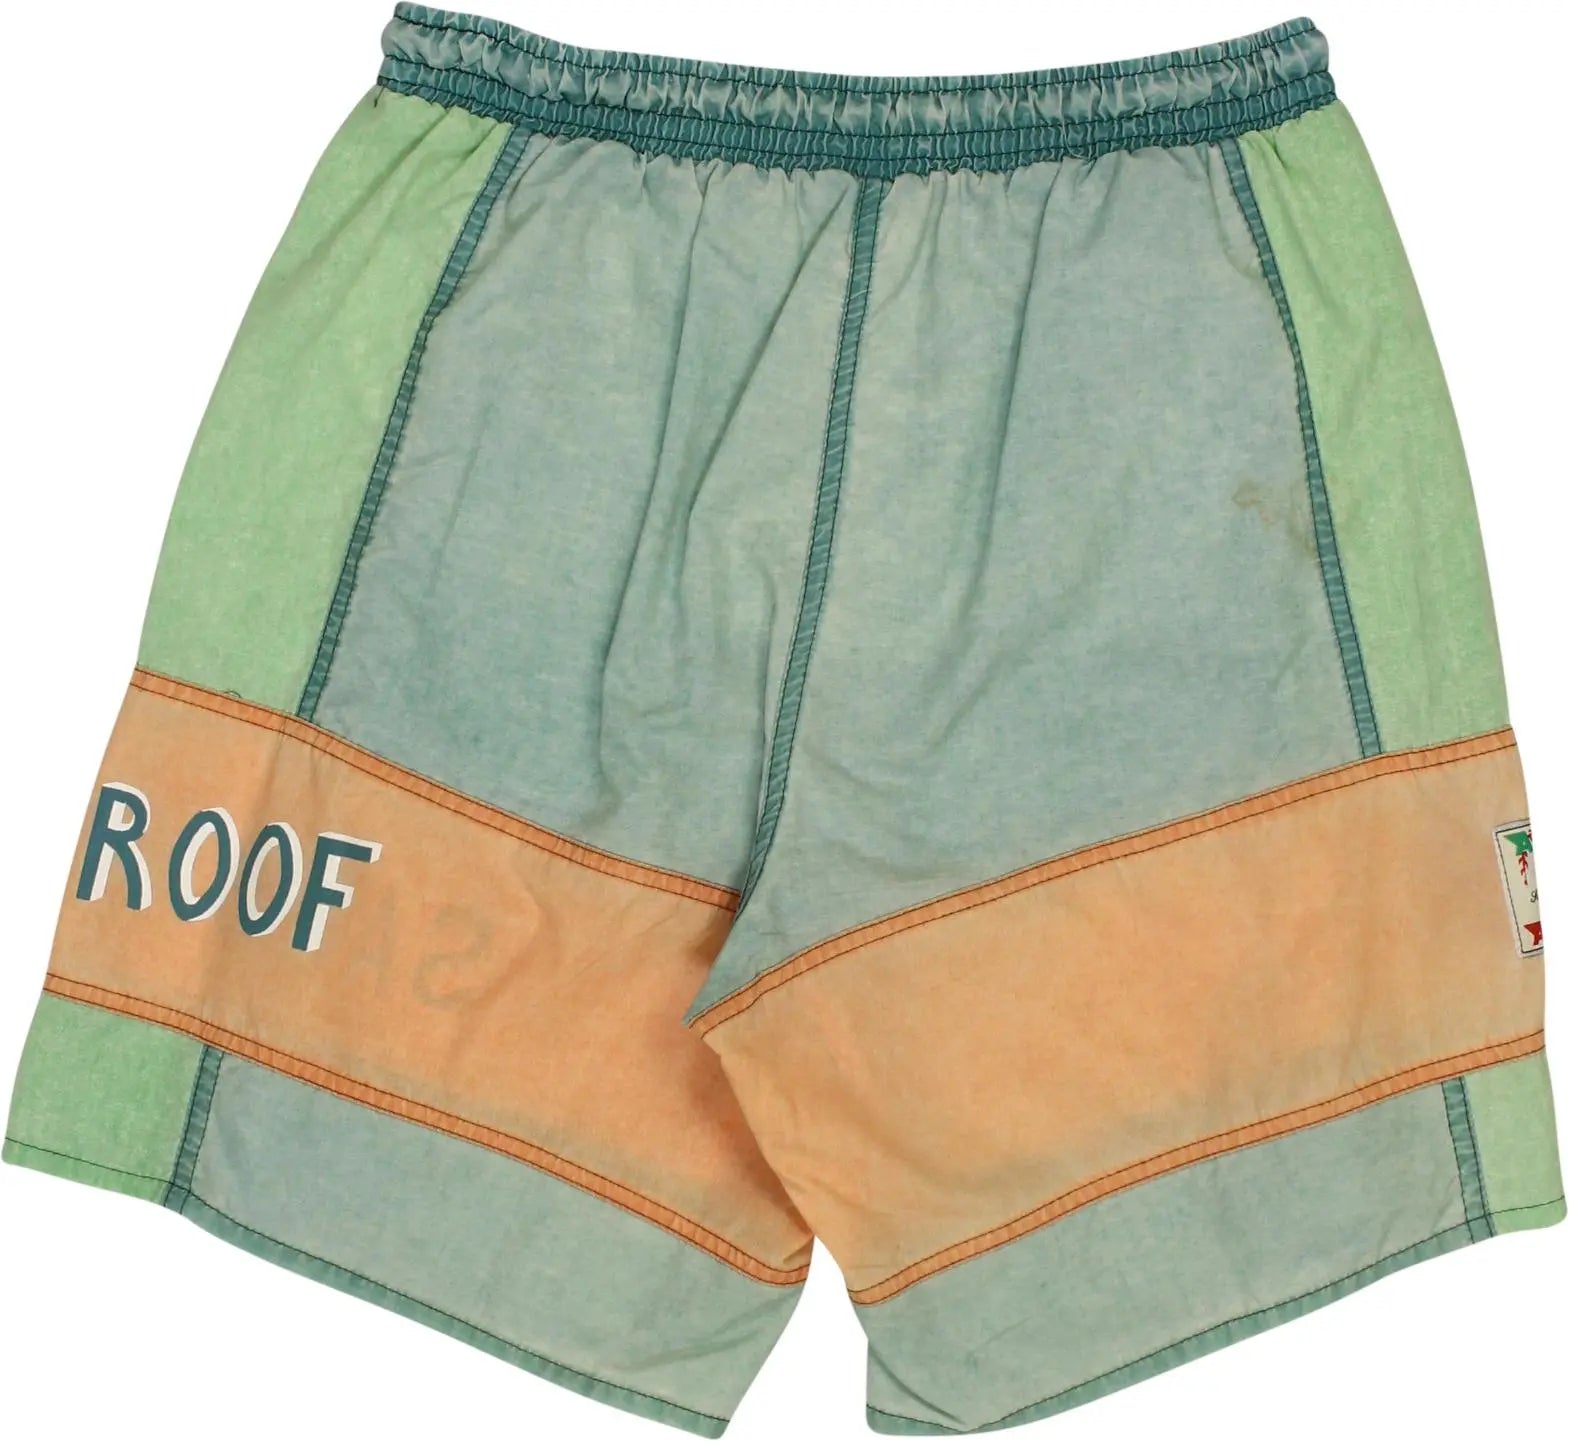 Alekay - Vintage Swim Shorts- ThriftTale.com - Vintage and second handclothing